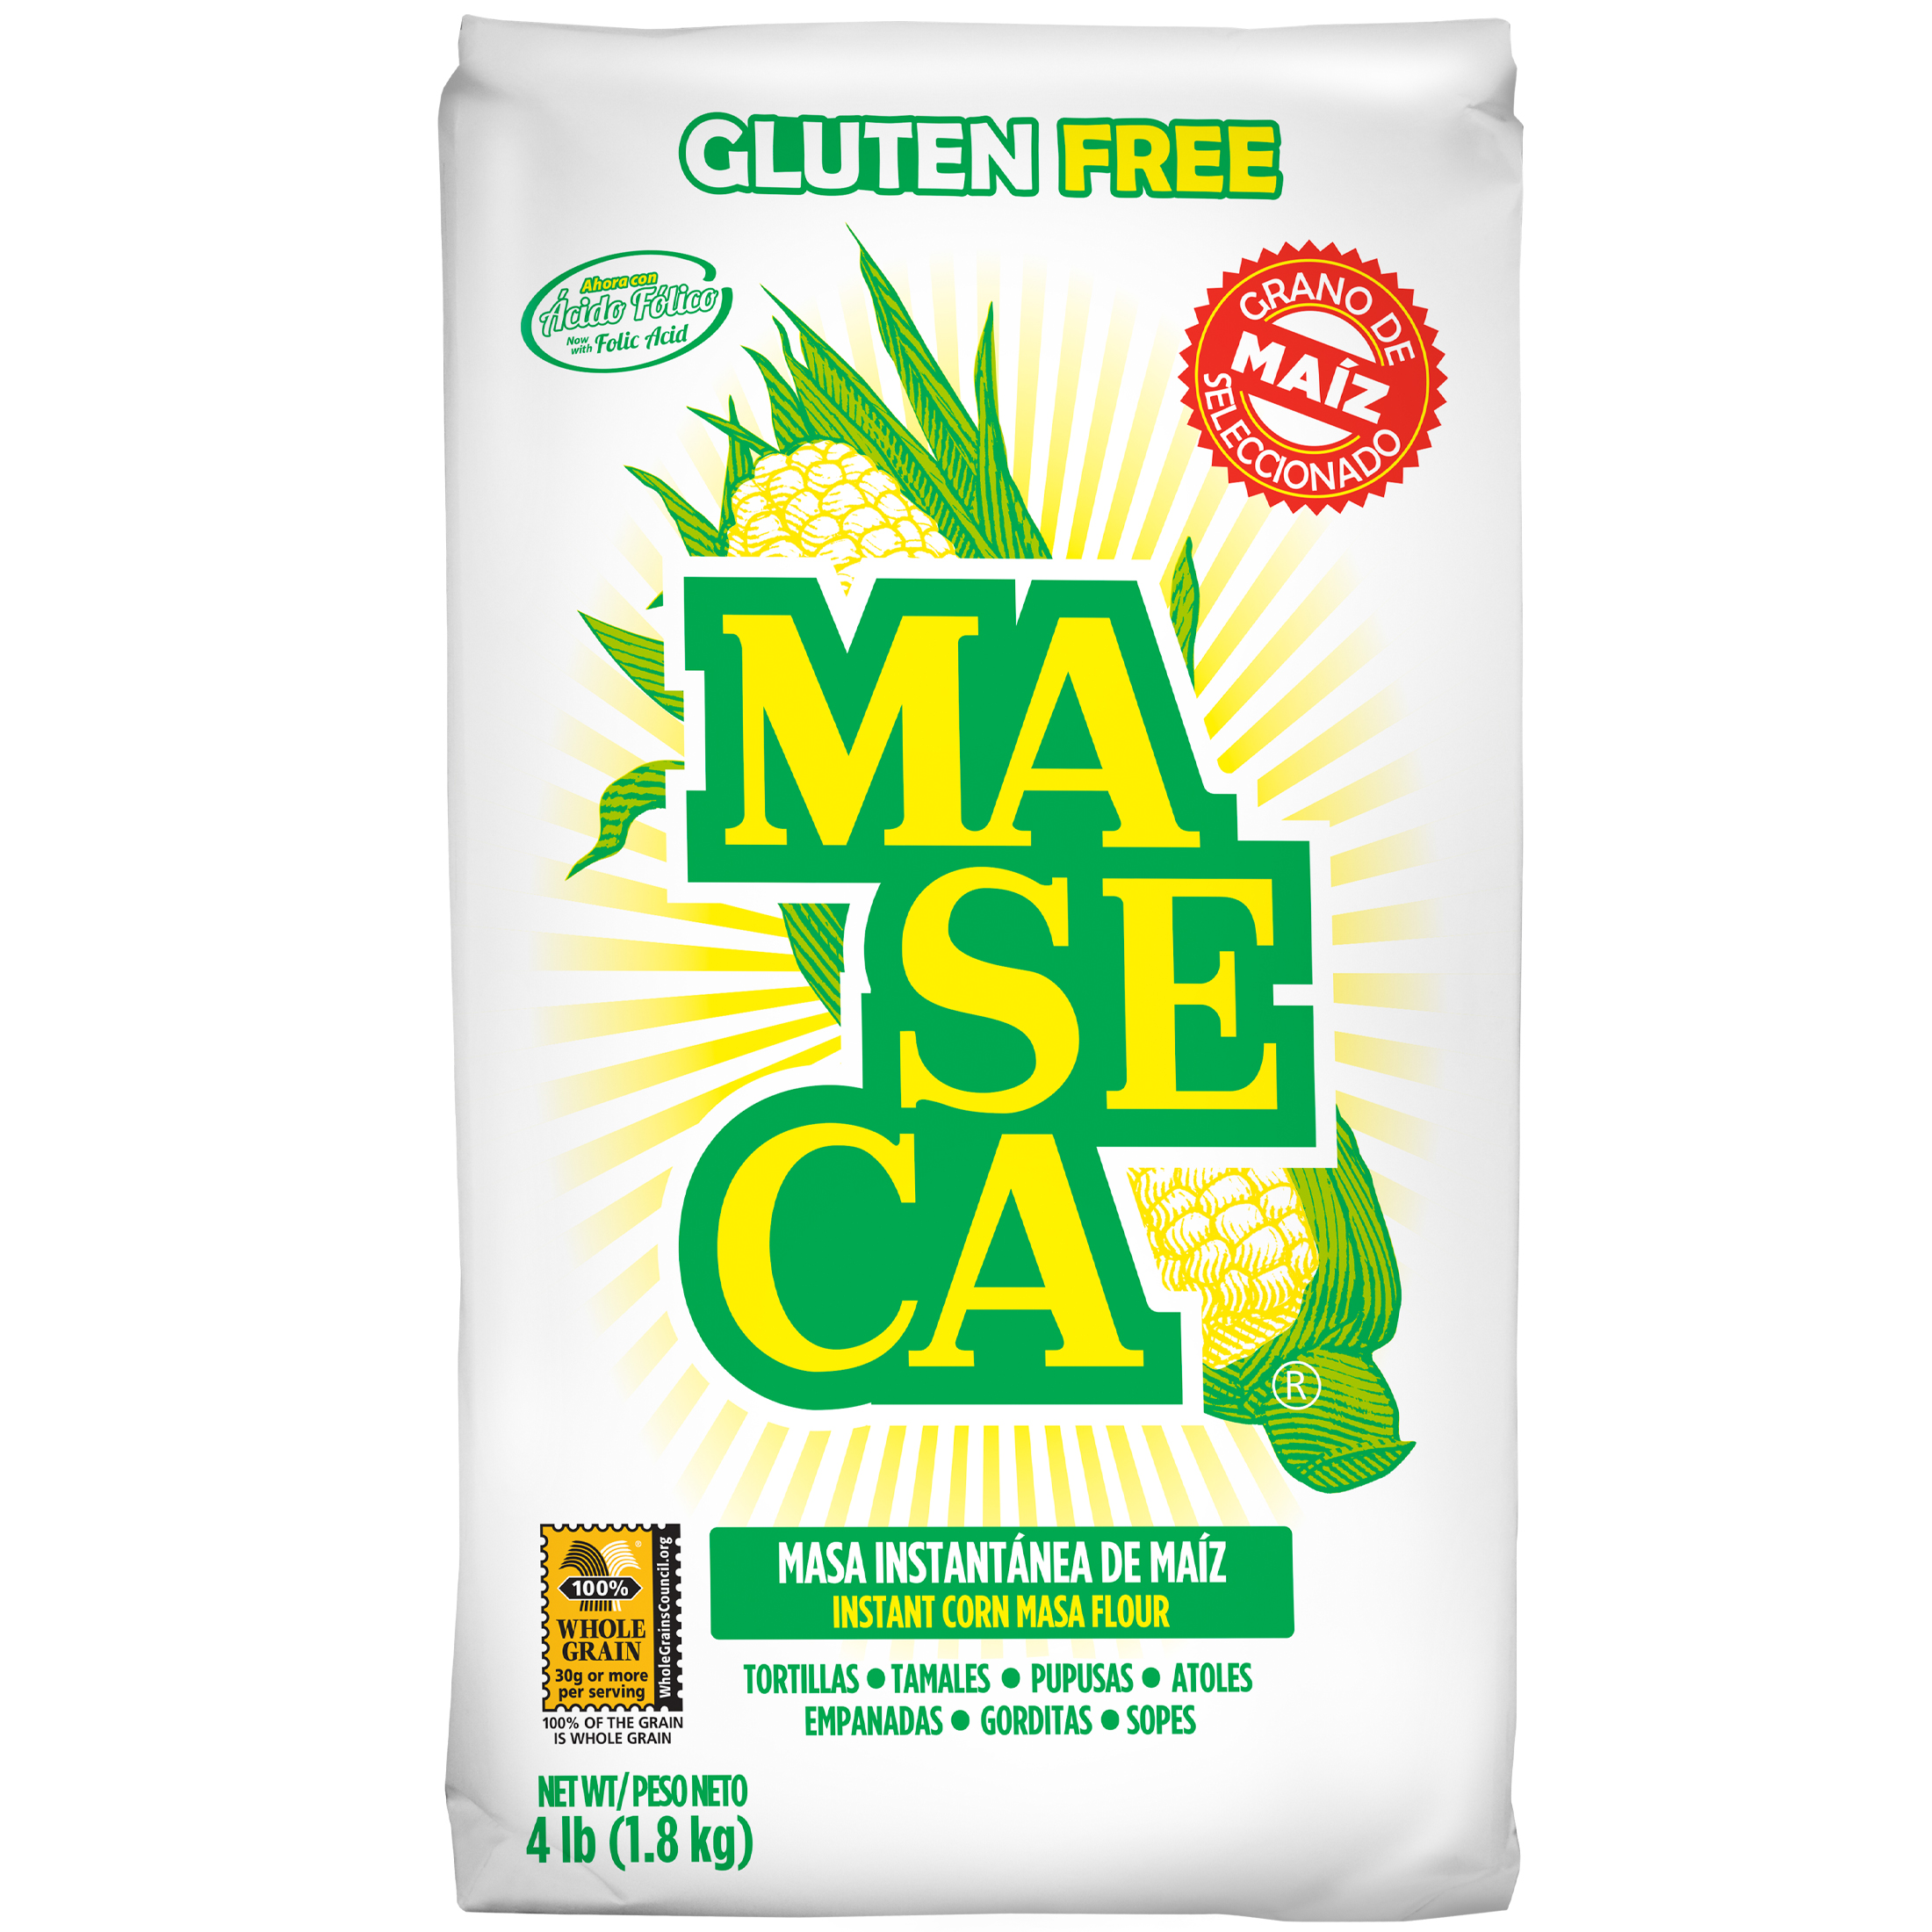 MASECA Traditional Instant Corn Masa Flour 4 Lb - image 1 of 6